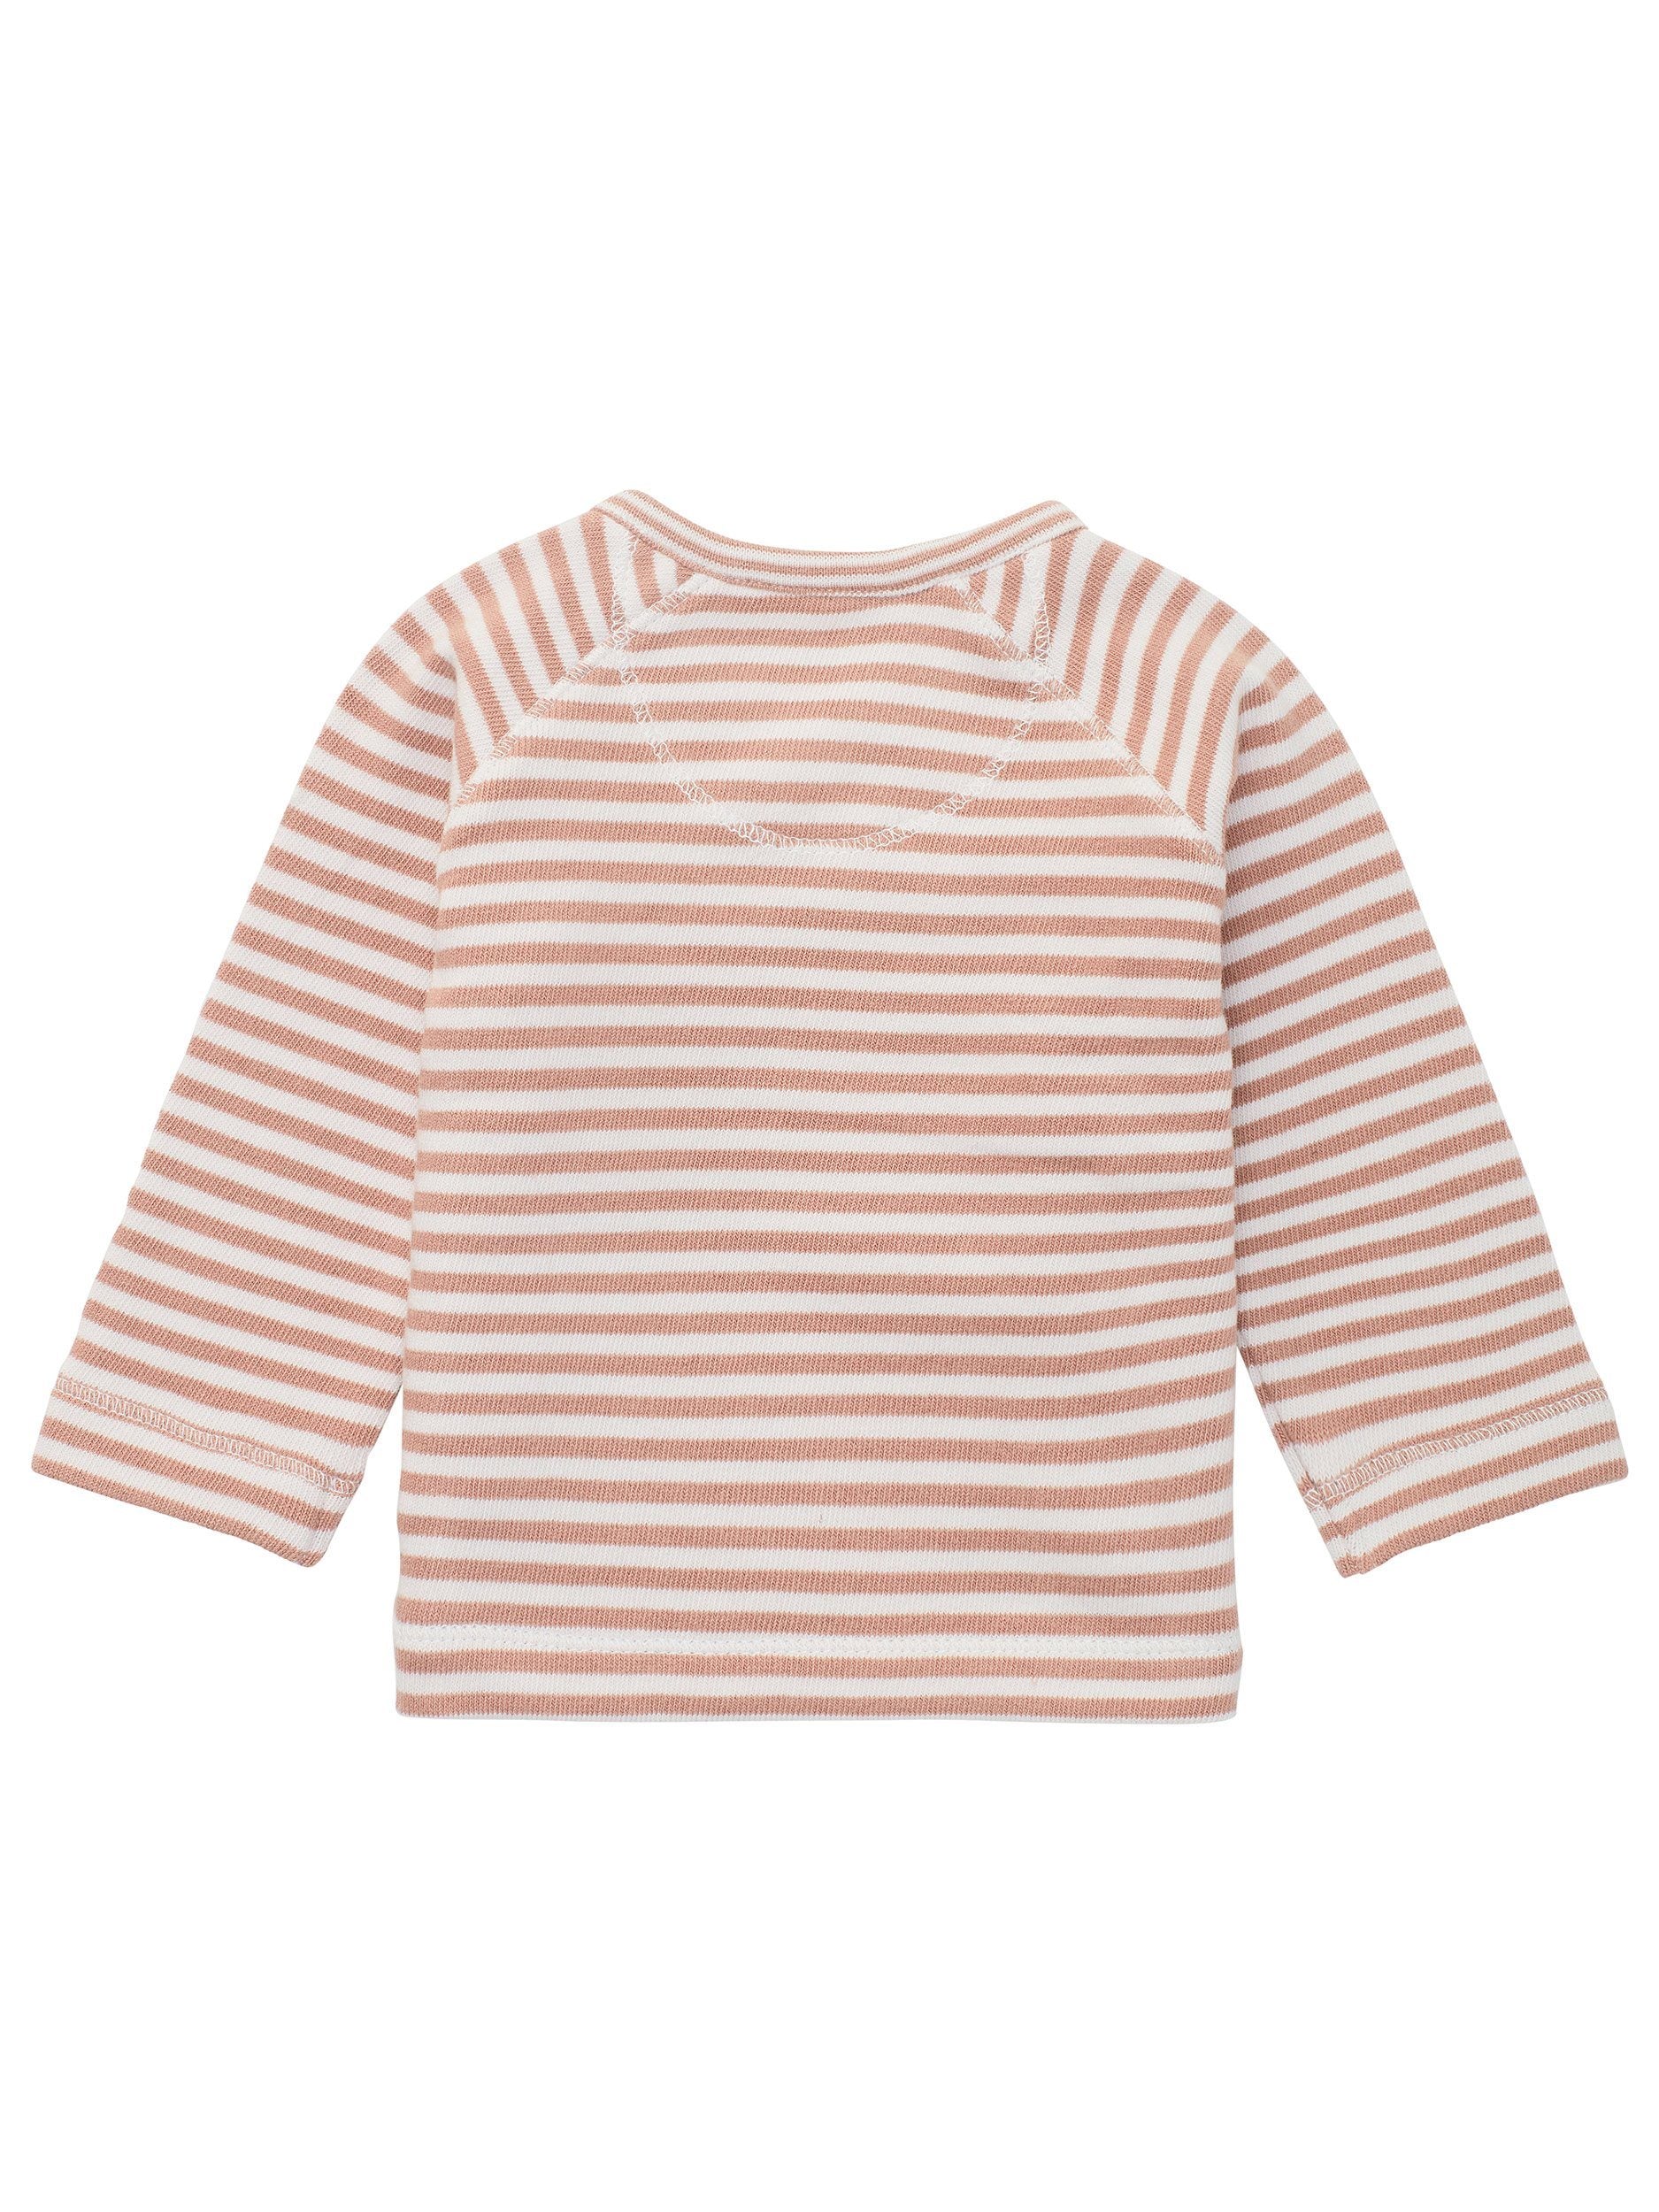 Long Sleeve Knit Top - Terracotta & Cream Stripe Top / T-shirt Noppies 